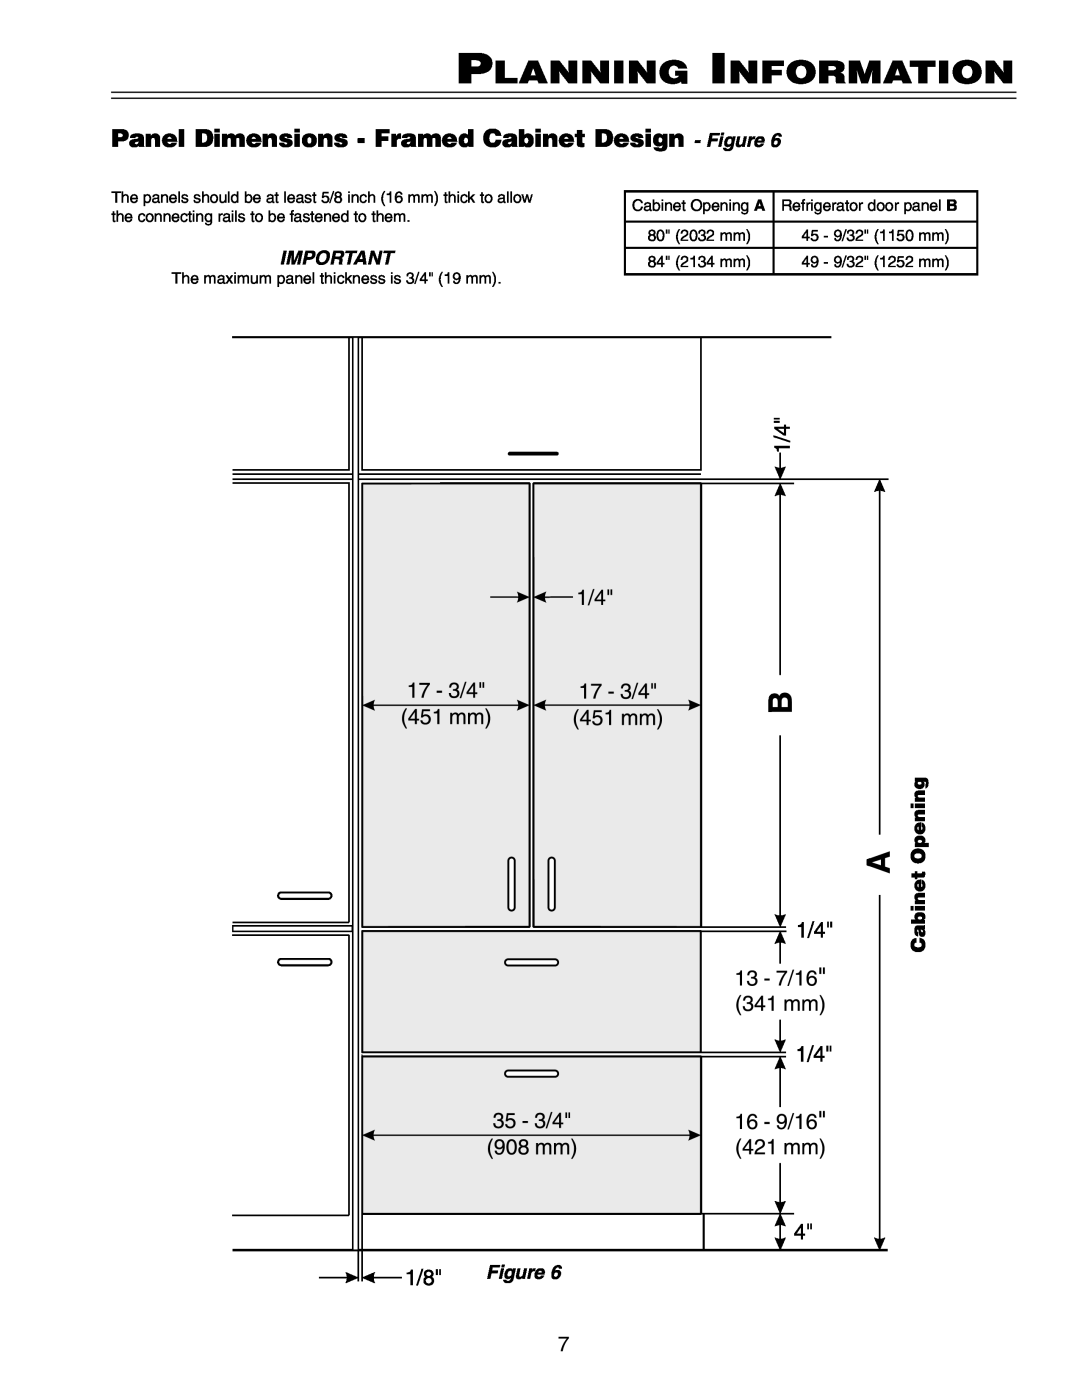 Liebherr HC 20 Panel Dimensions - Framed Cabinet Design - Figure, Planning Information, Cabinet Opening A, 80 2032 mm 